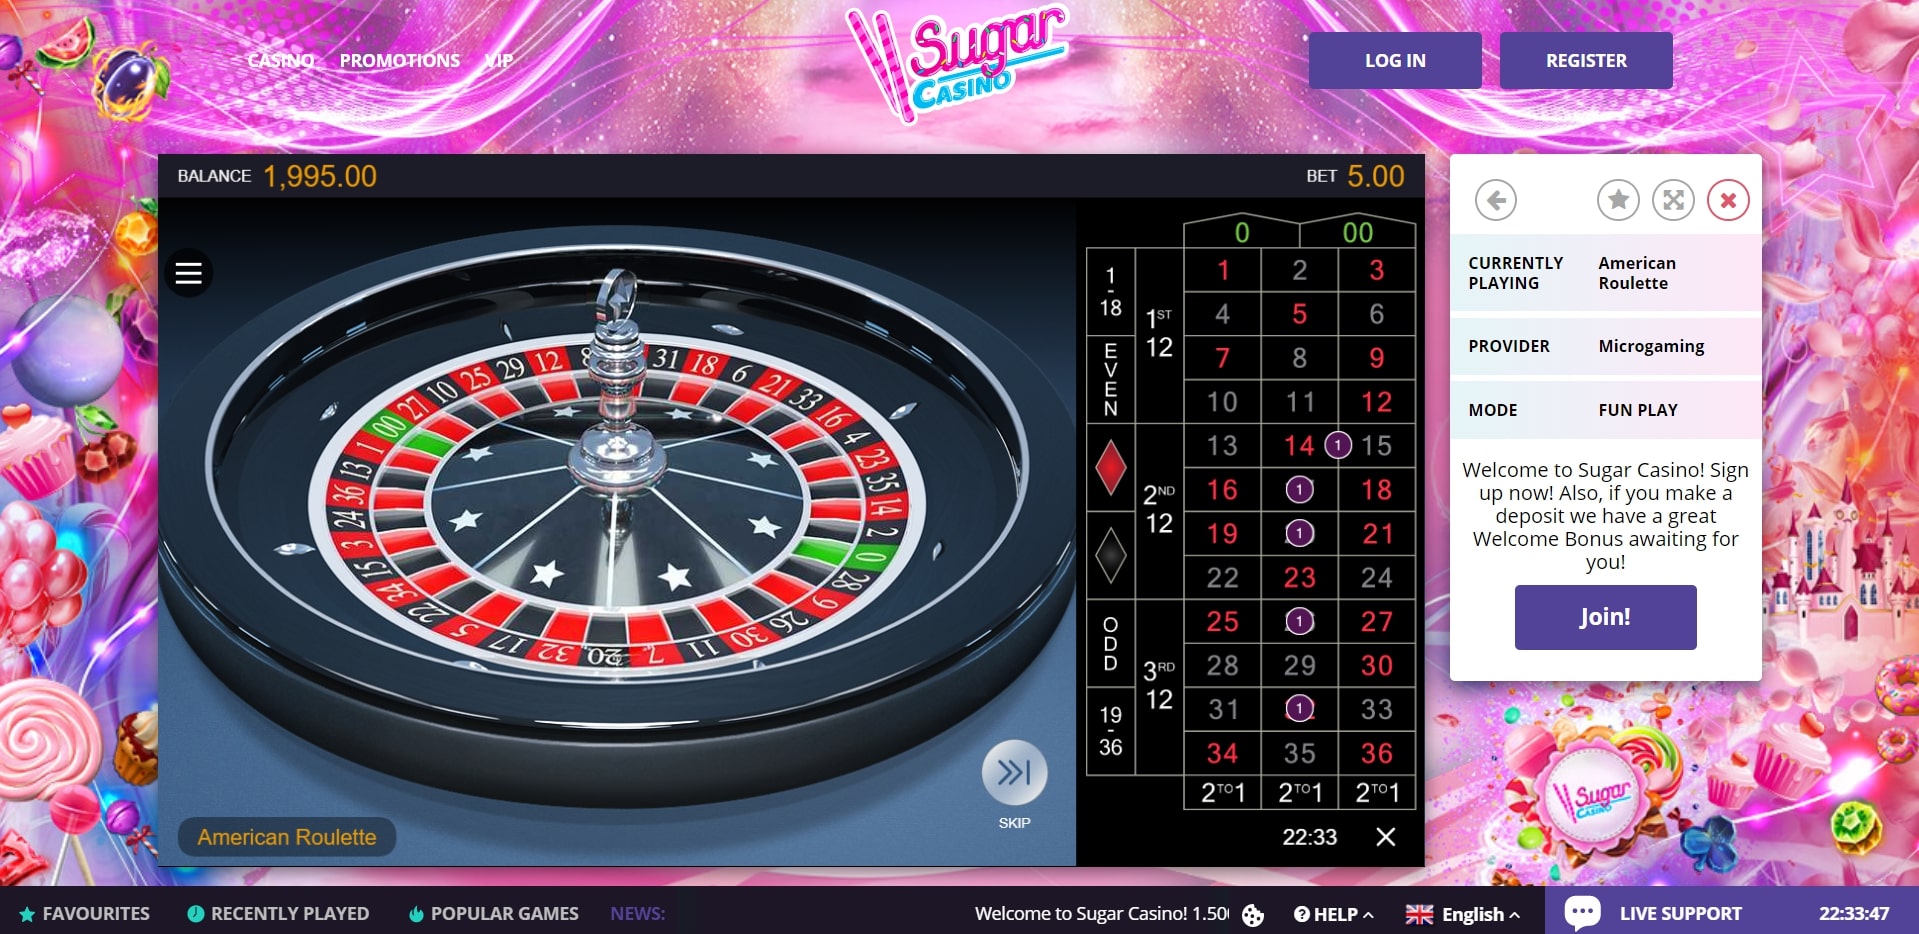 Sugar Casino Casino Games